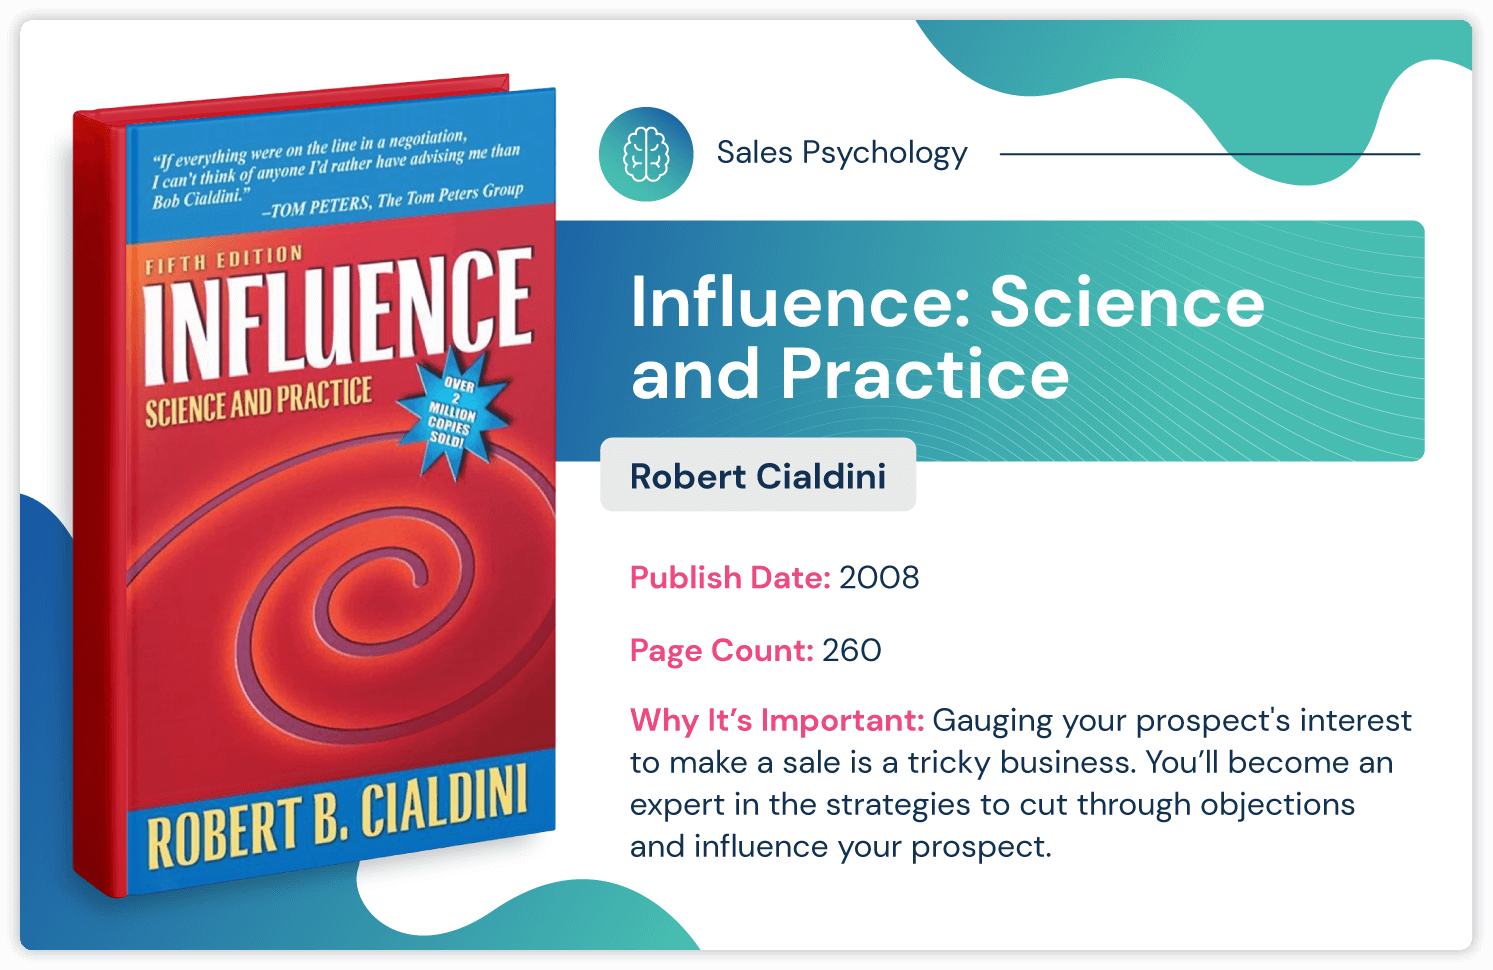 Robert Cialdini 的銷售心理學書籍《影響力：科學與實踐》講述瞭如何影響銷售策略；於 2008 年出版，長達 260 頁。